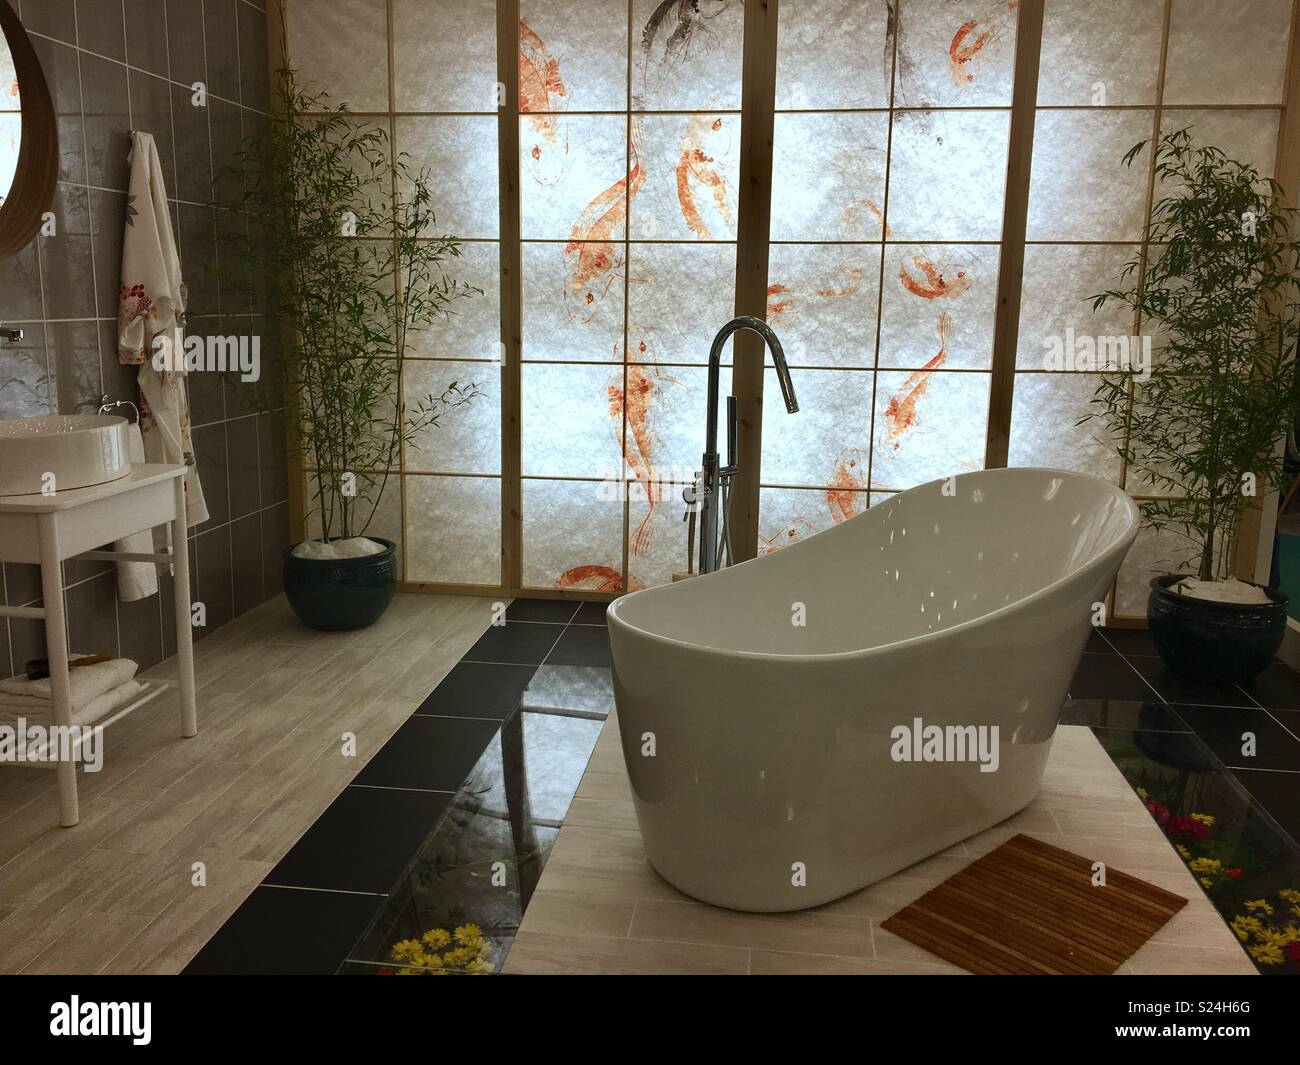 Japanese bathroom interior design inspiration Stock Photo